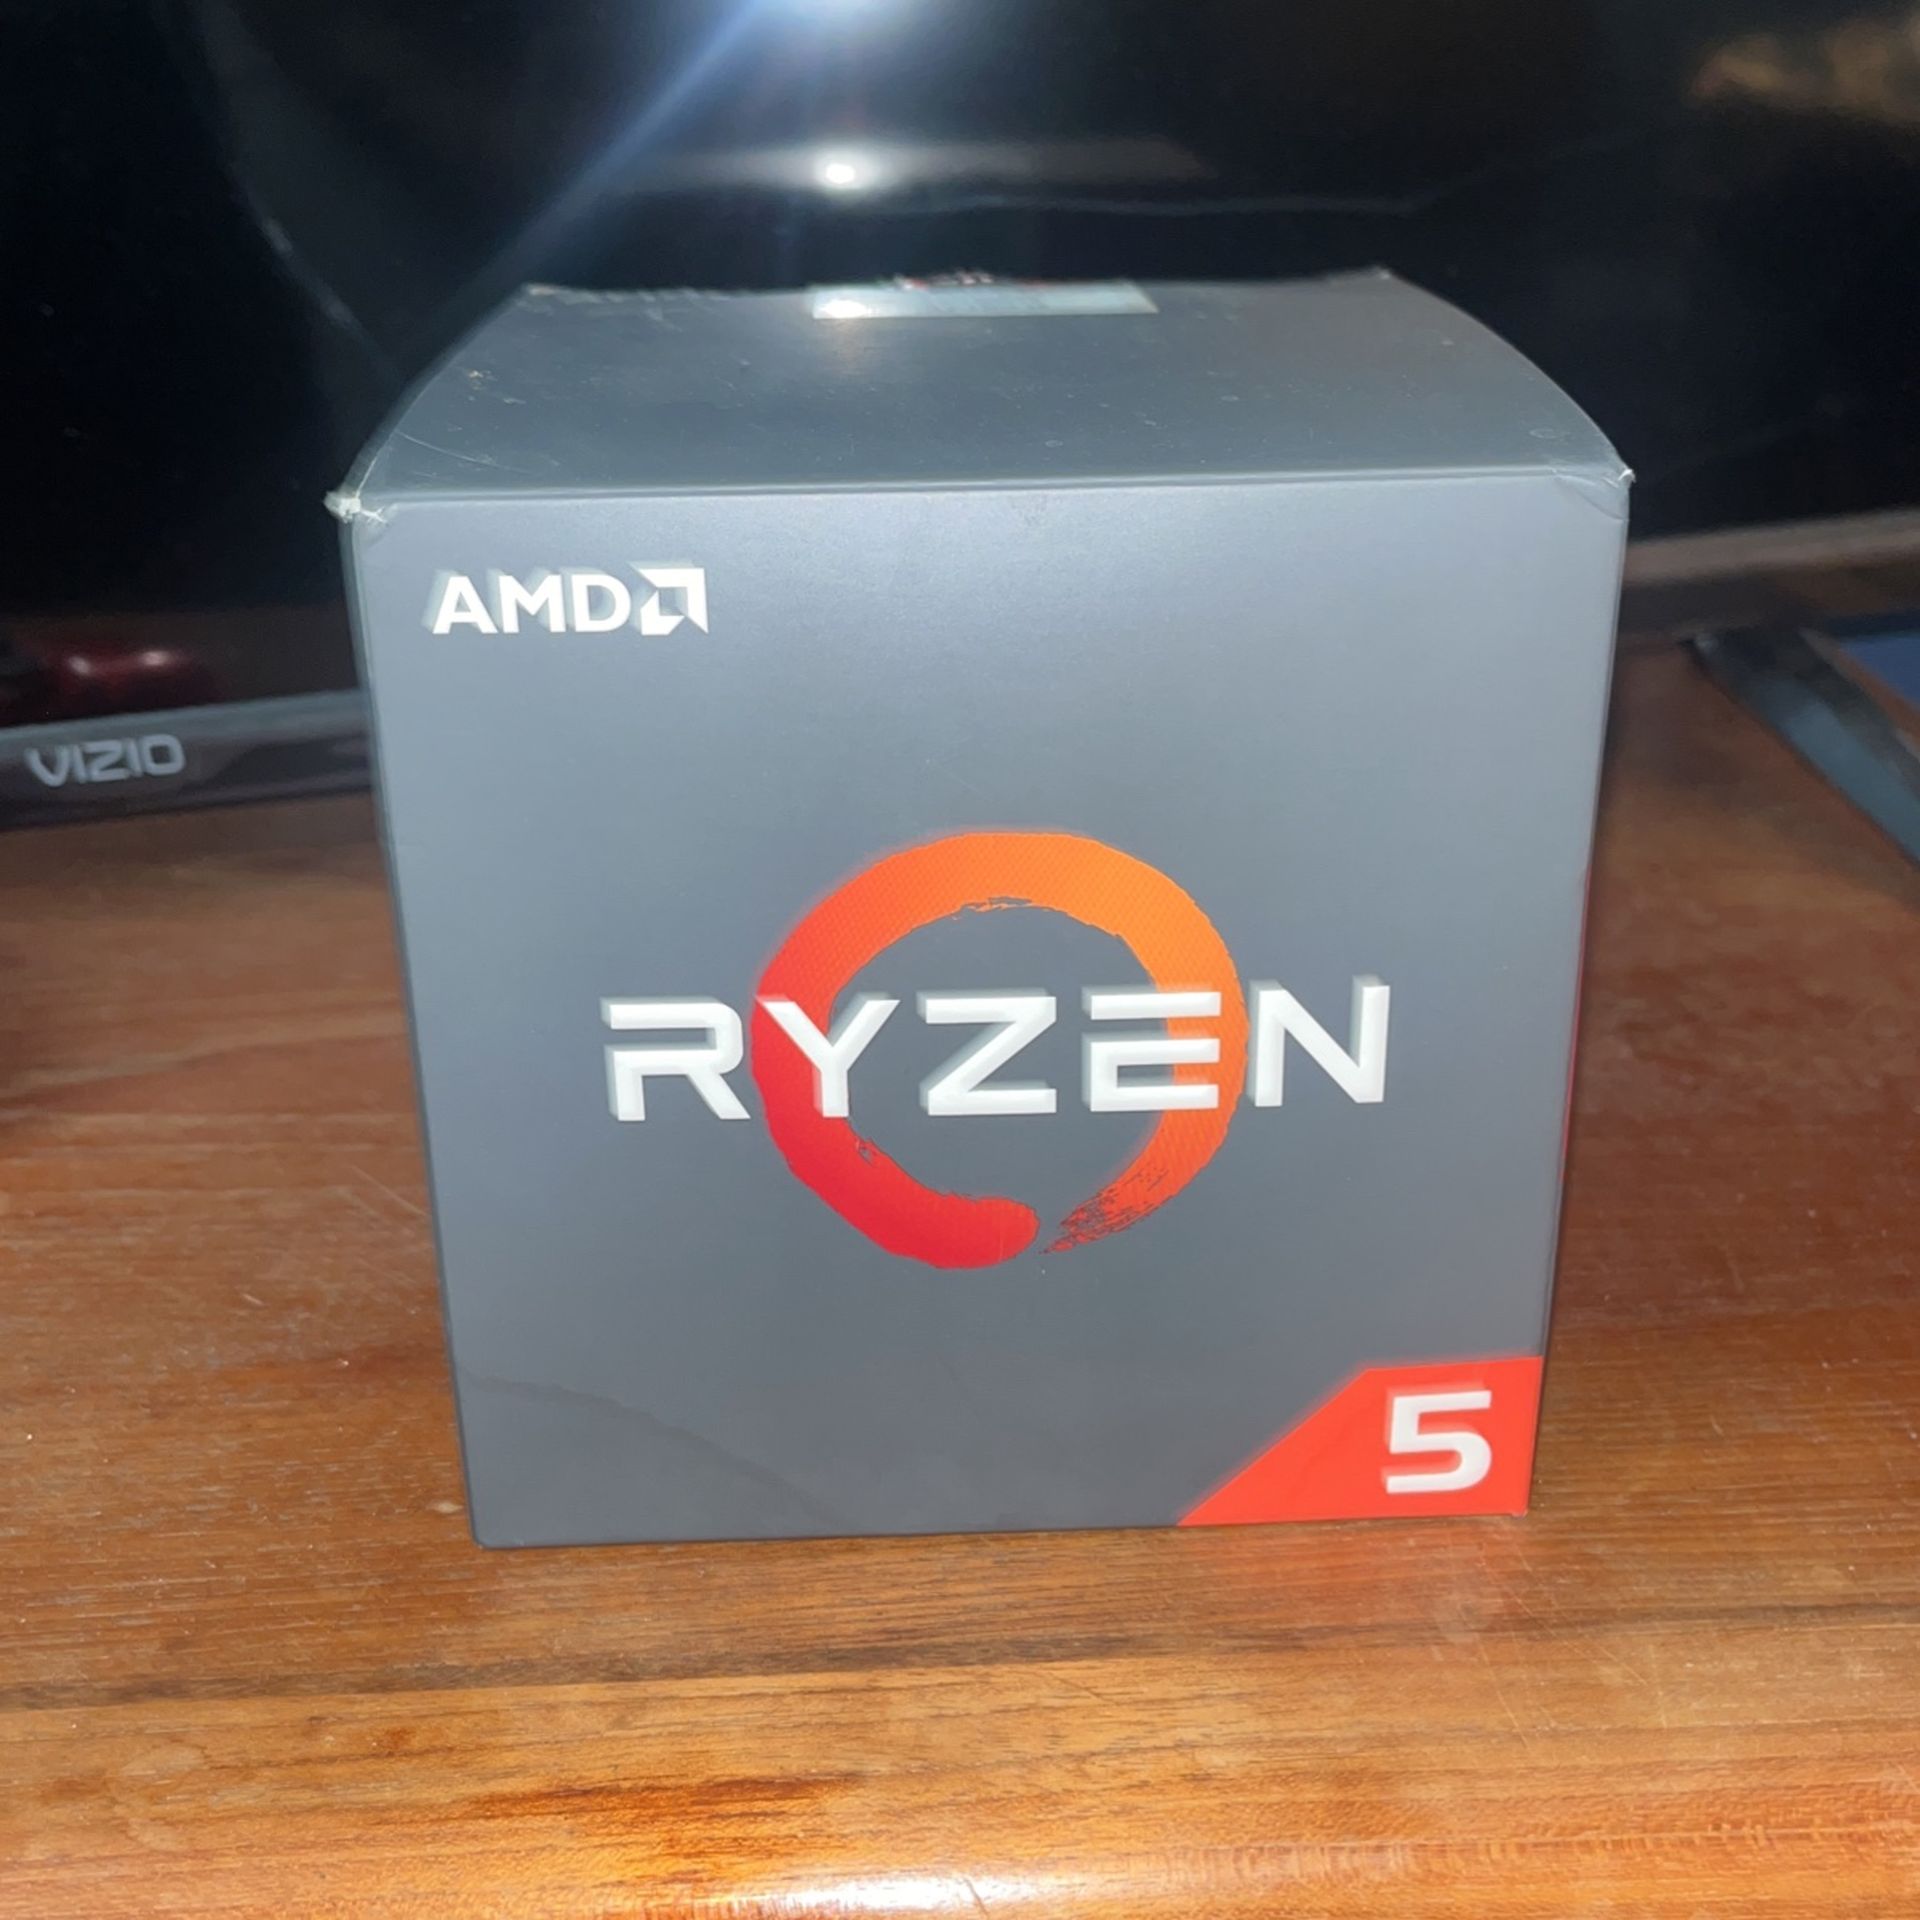 AMD ryzen 5 2600x